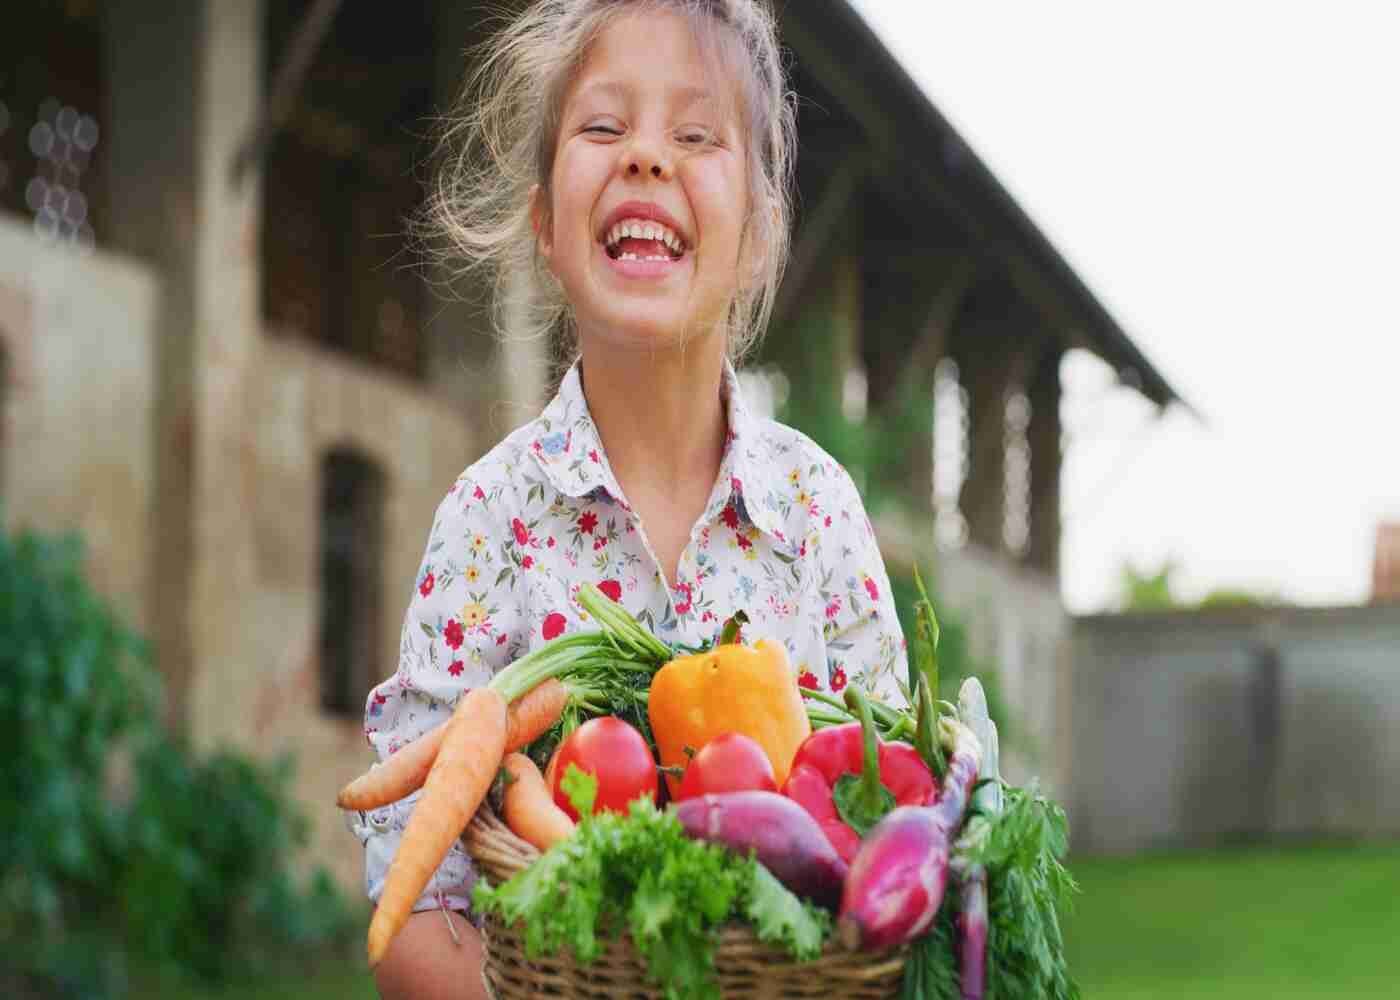 Cute little girl holds basket of vegetables